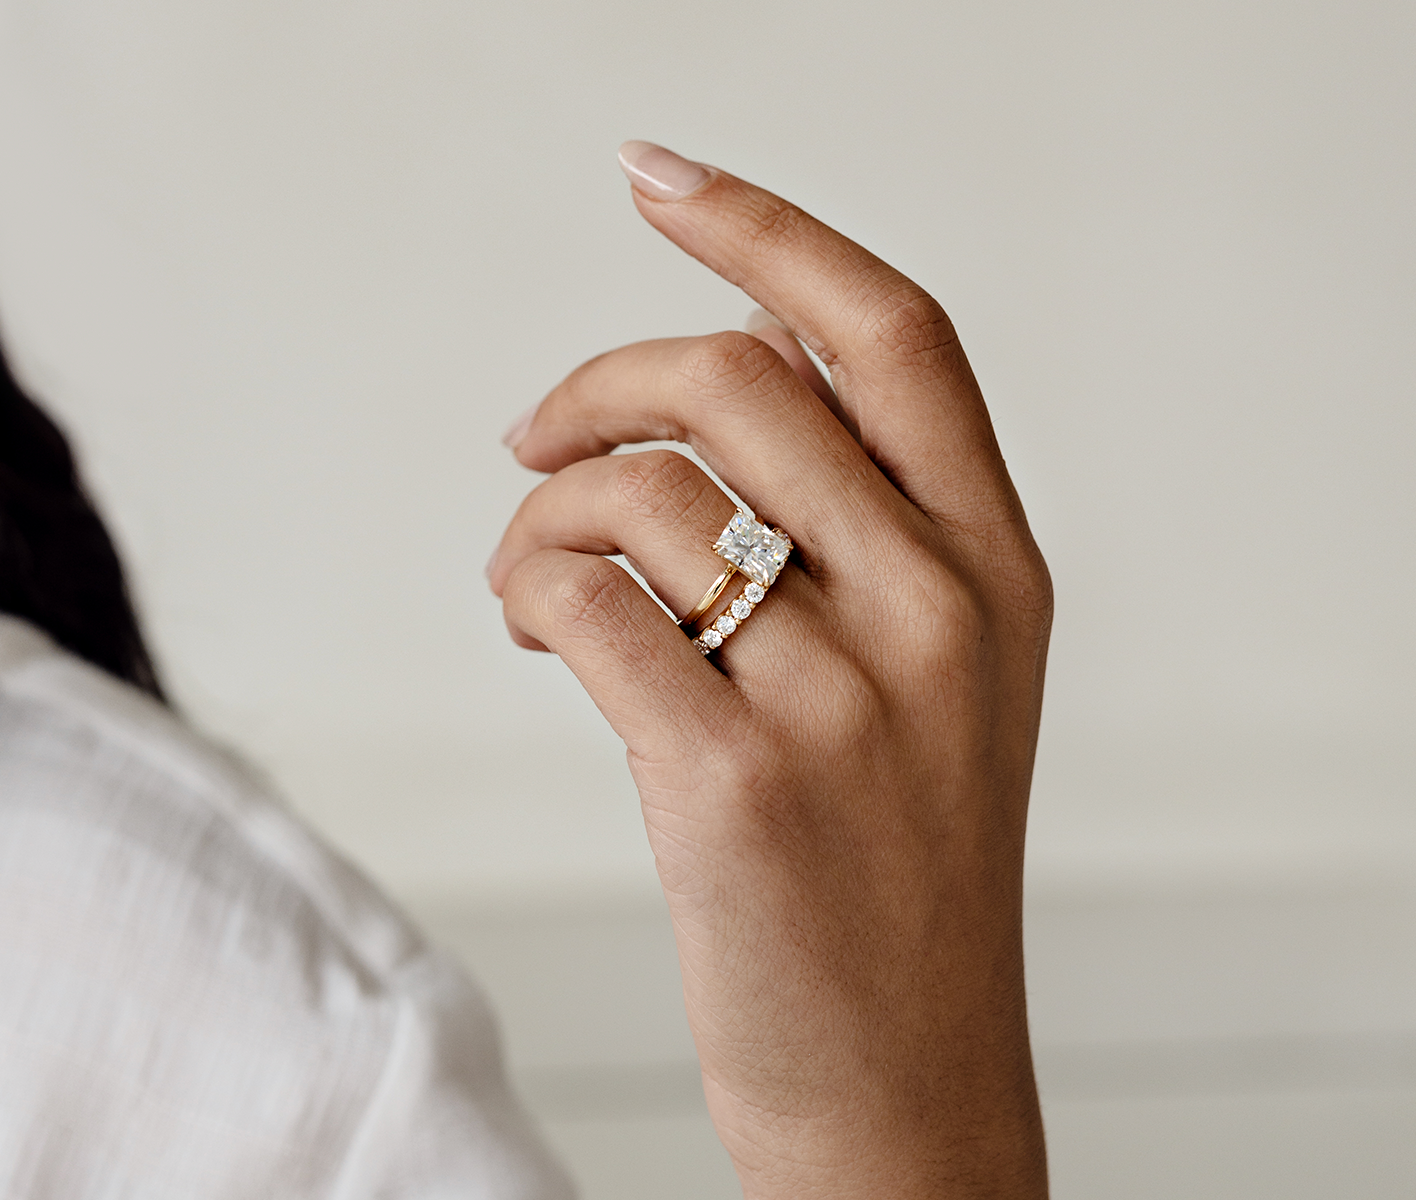 Shop Lab Grown Diamond Engagement Rings in Sydney | Cullen Jewellery